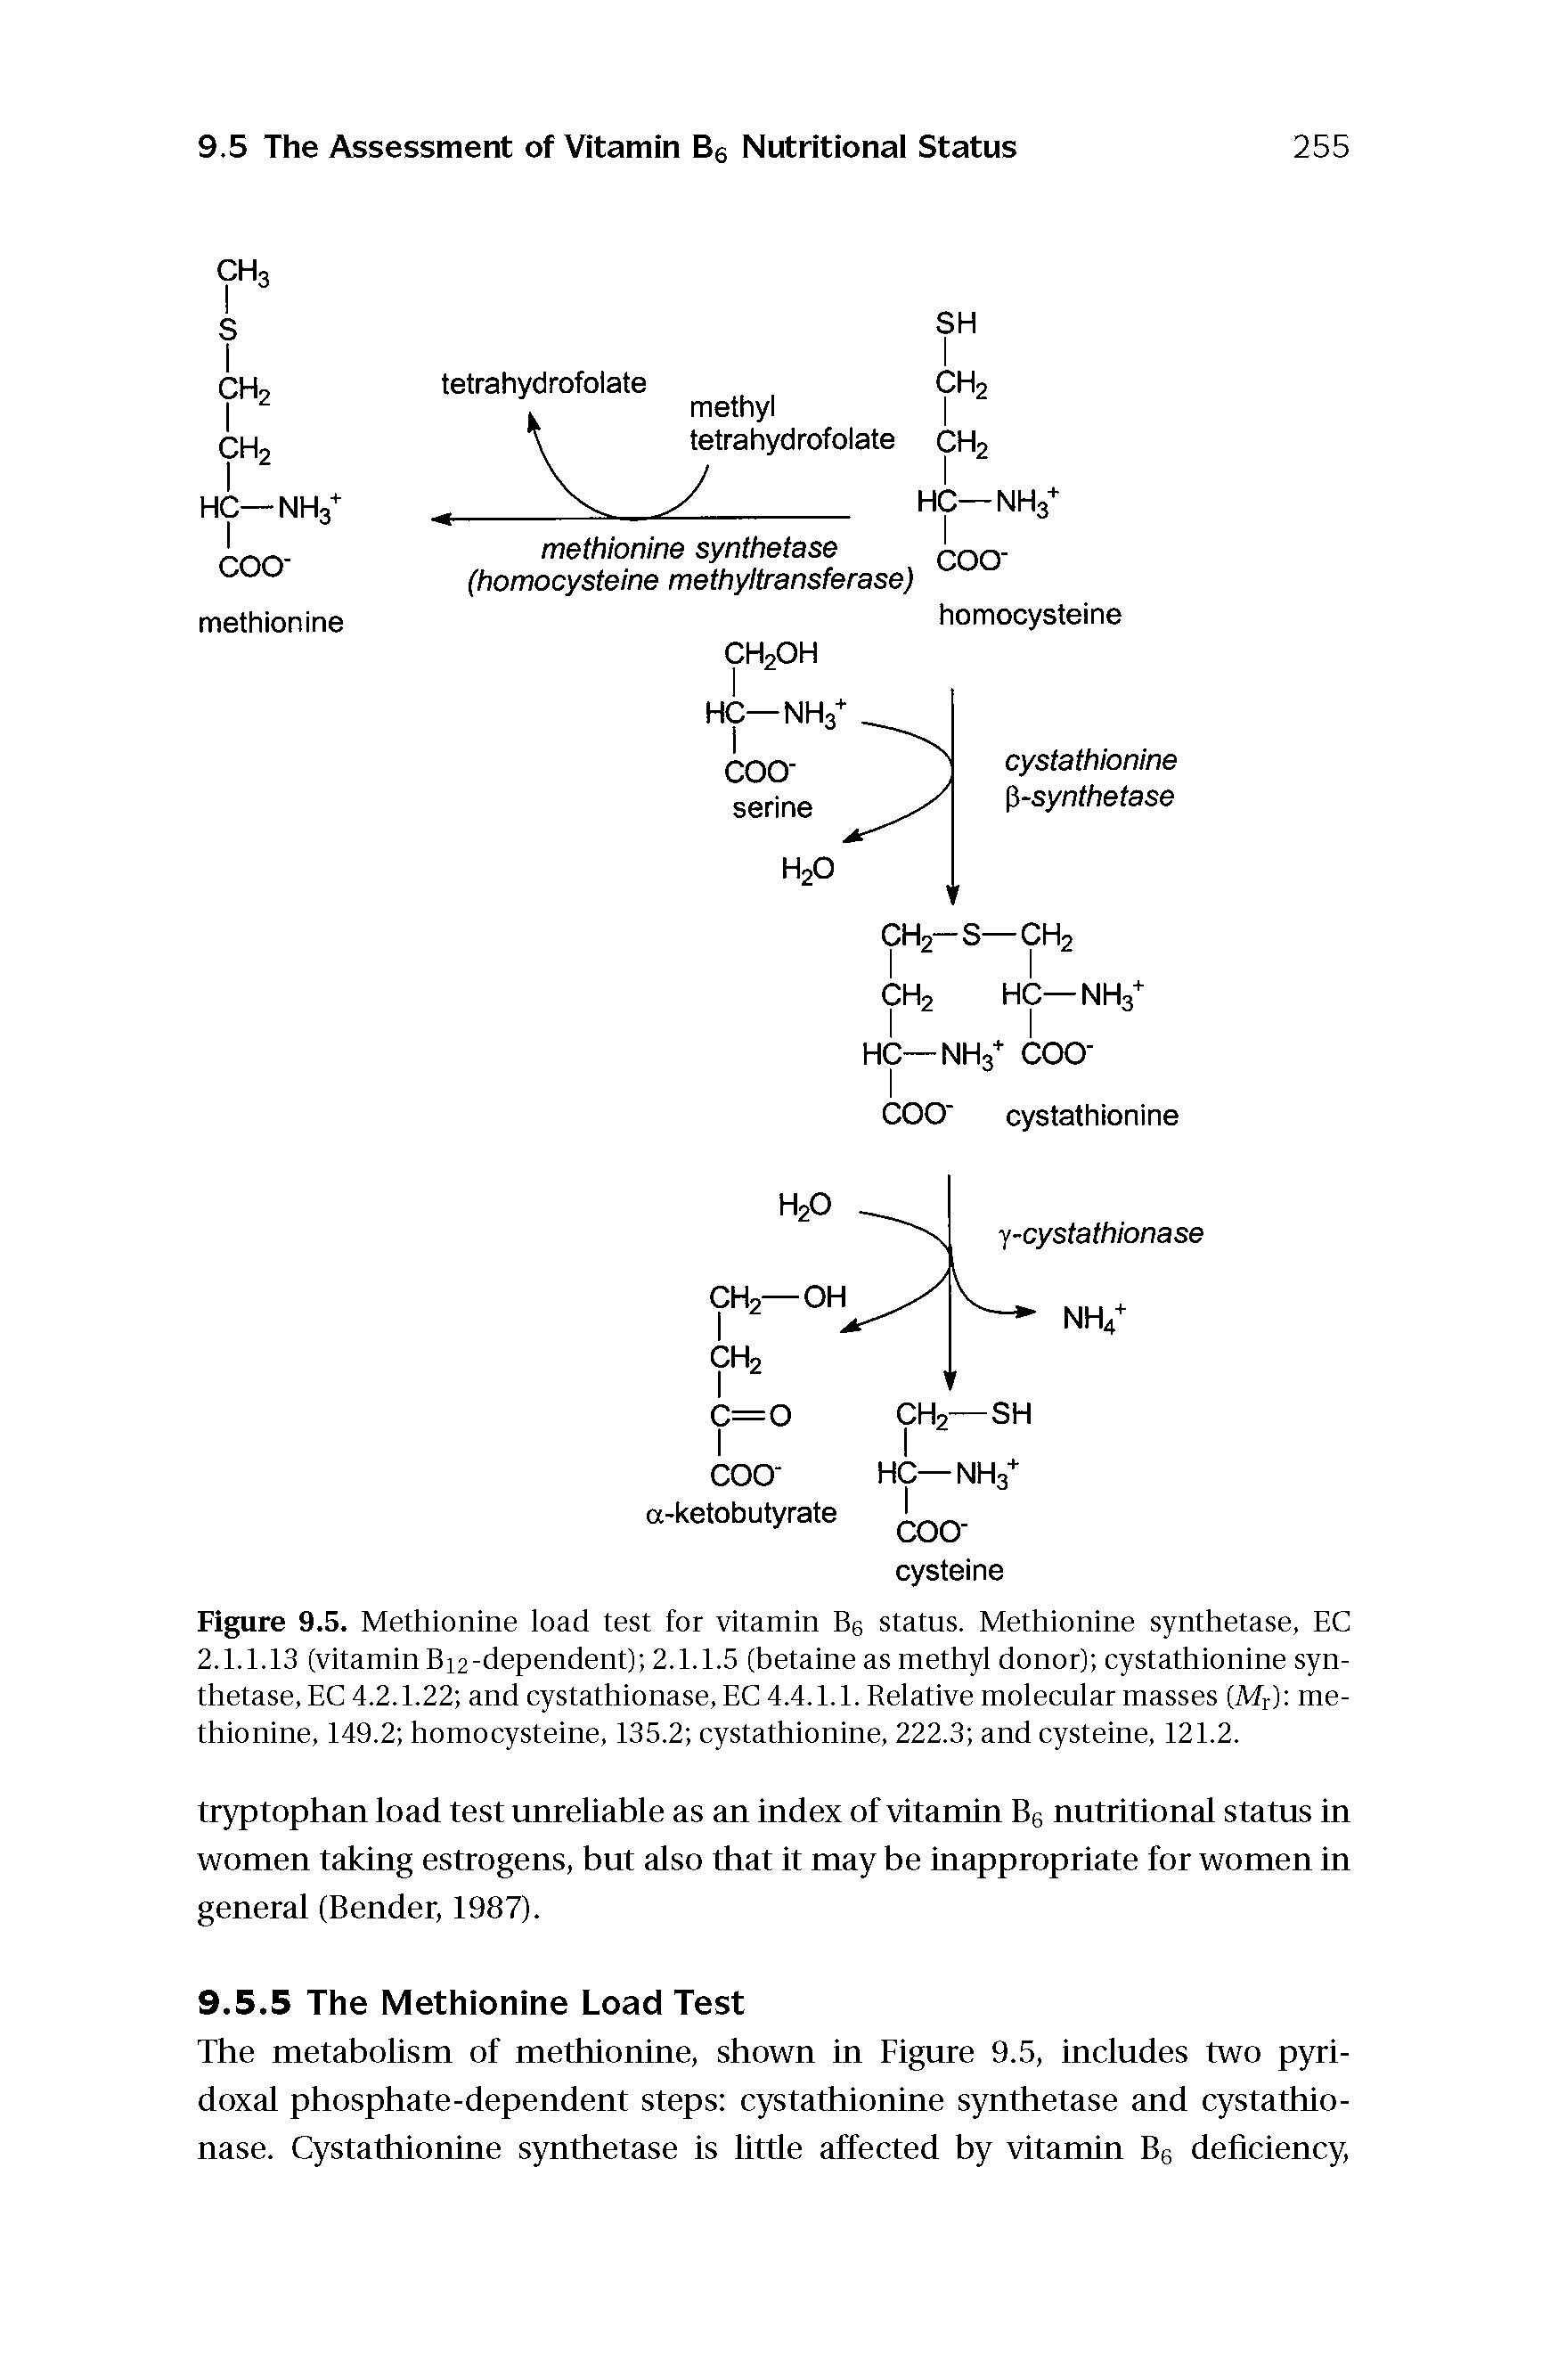 Figure 9.5. Methionine load test for vitamin Be status. Methionine synthetase, EC 2.1.1.13 (vitamin Bi2-dependent) 2.1.1.5 (betaine as methyl donor) cystathionine synthetase, EC 4.2.1.22 and cystathionase, EC 4.4.1.1. Relative molecular masses (Mr) methionine, 149.2 homocysteine, 135.2 cystathionine, 222.3 and cysteine, 121.2.